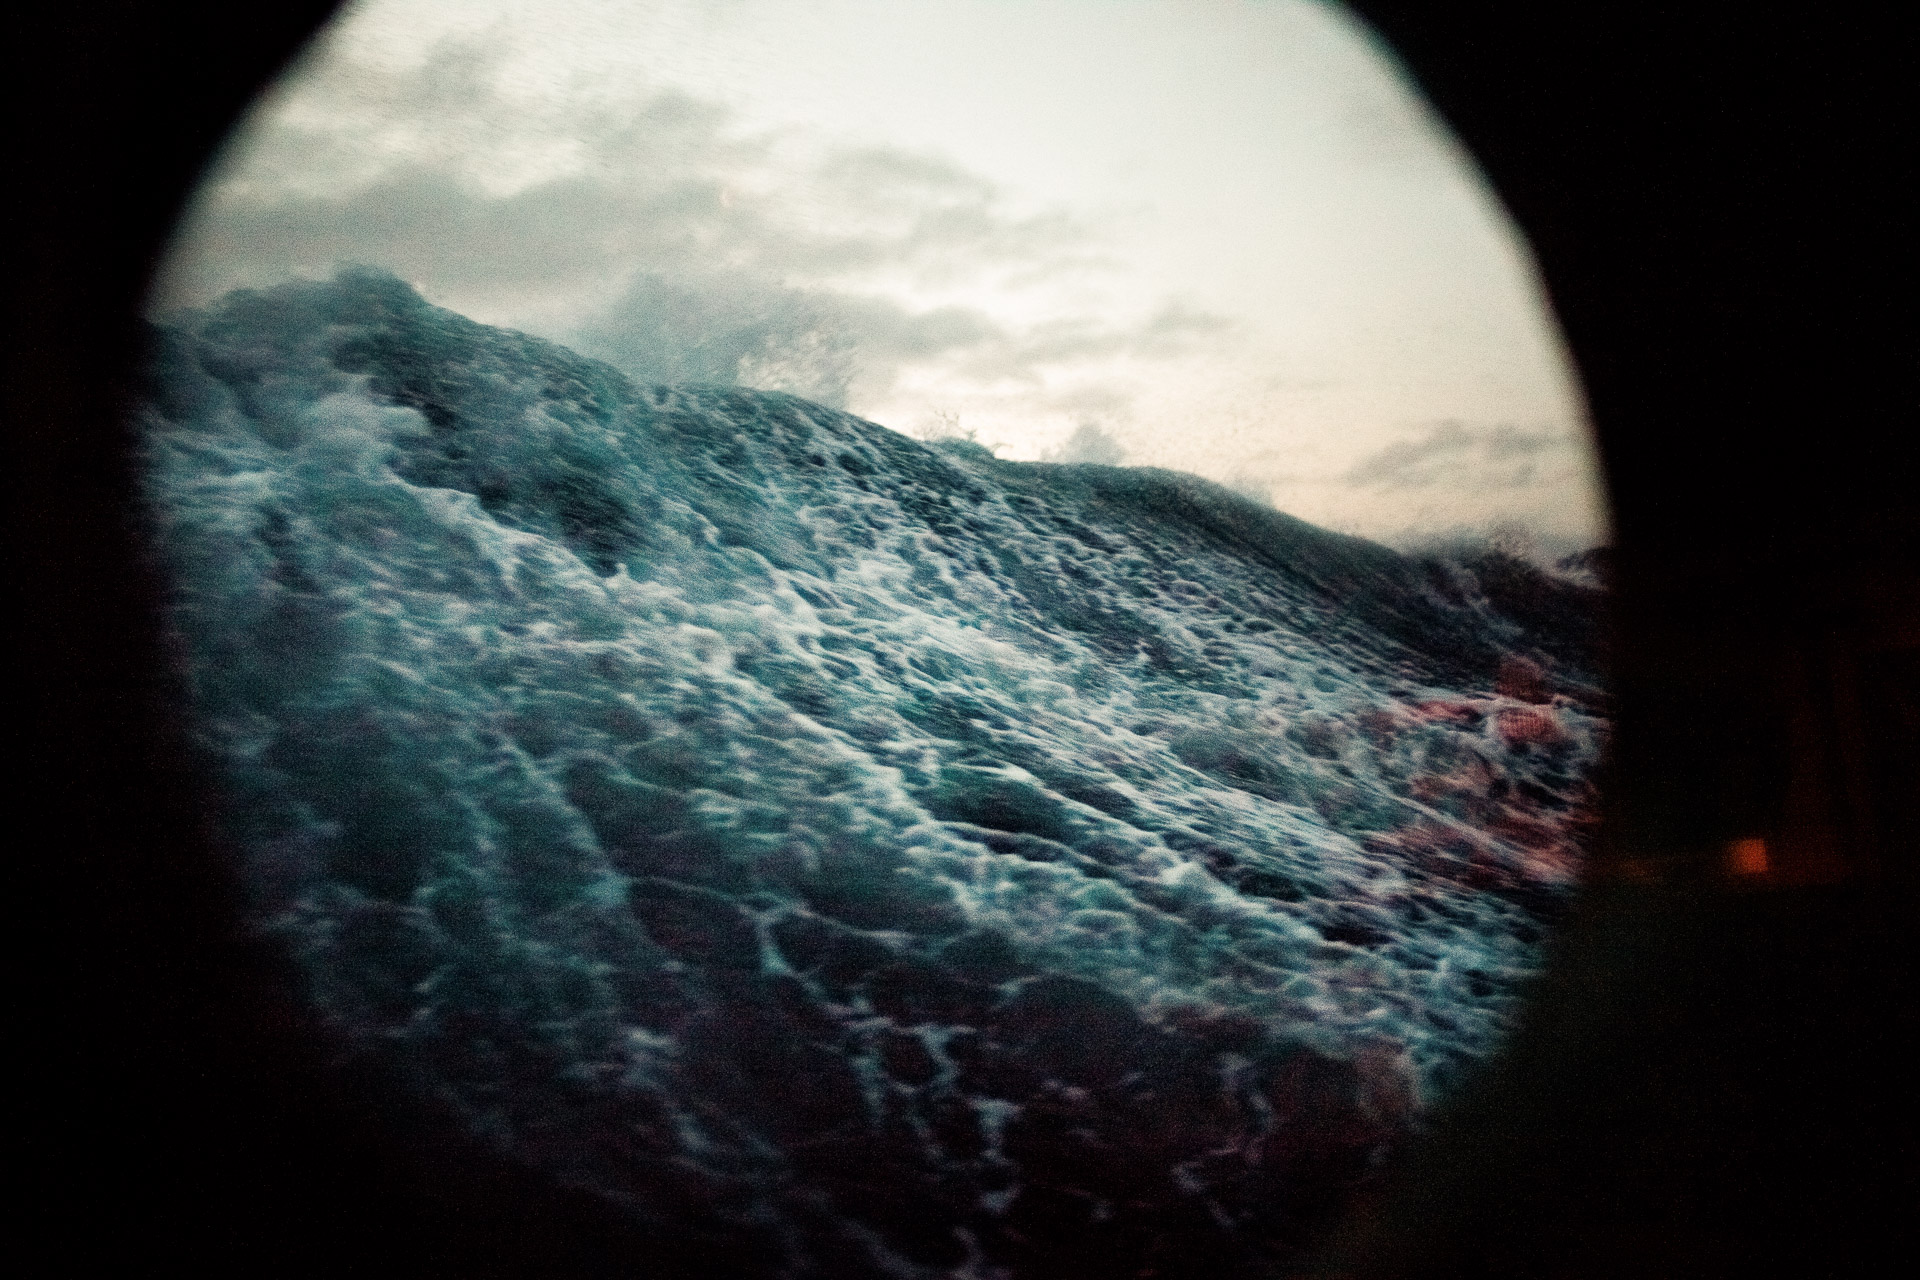 Stormy sea through a ship's porthole